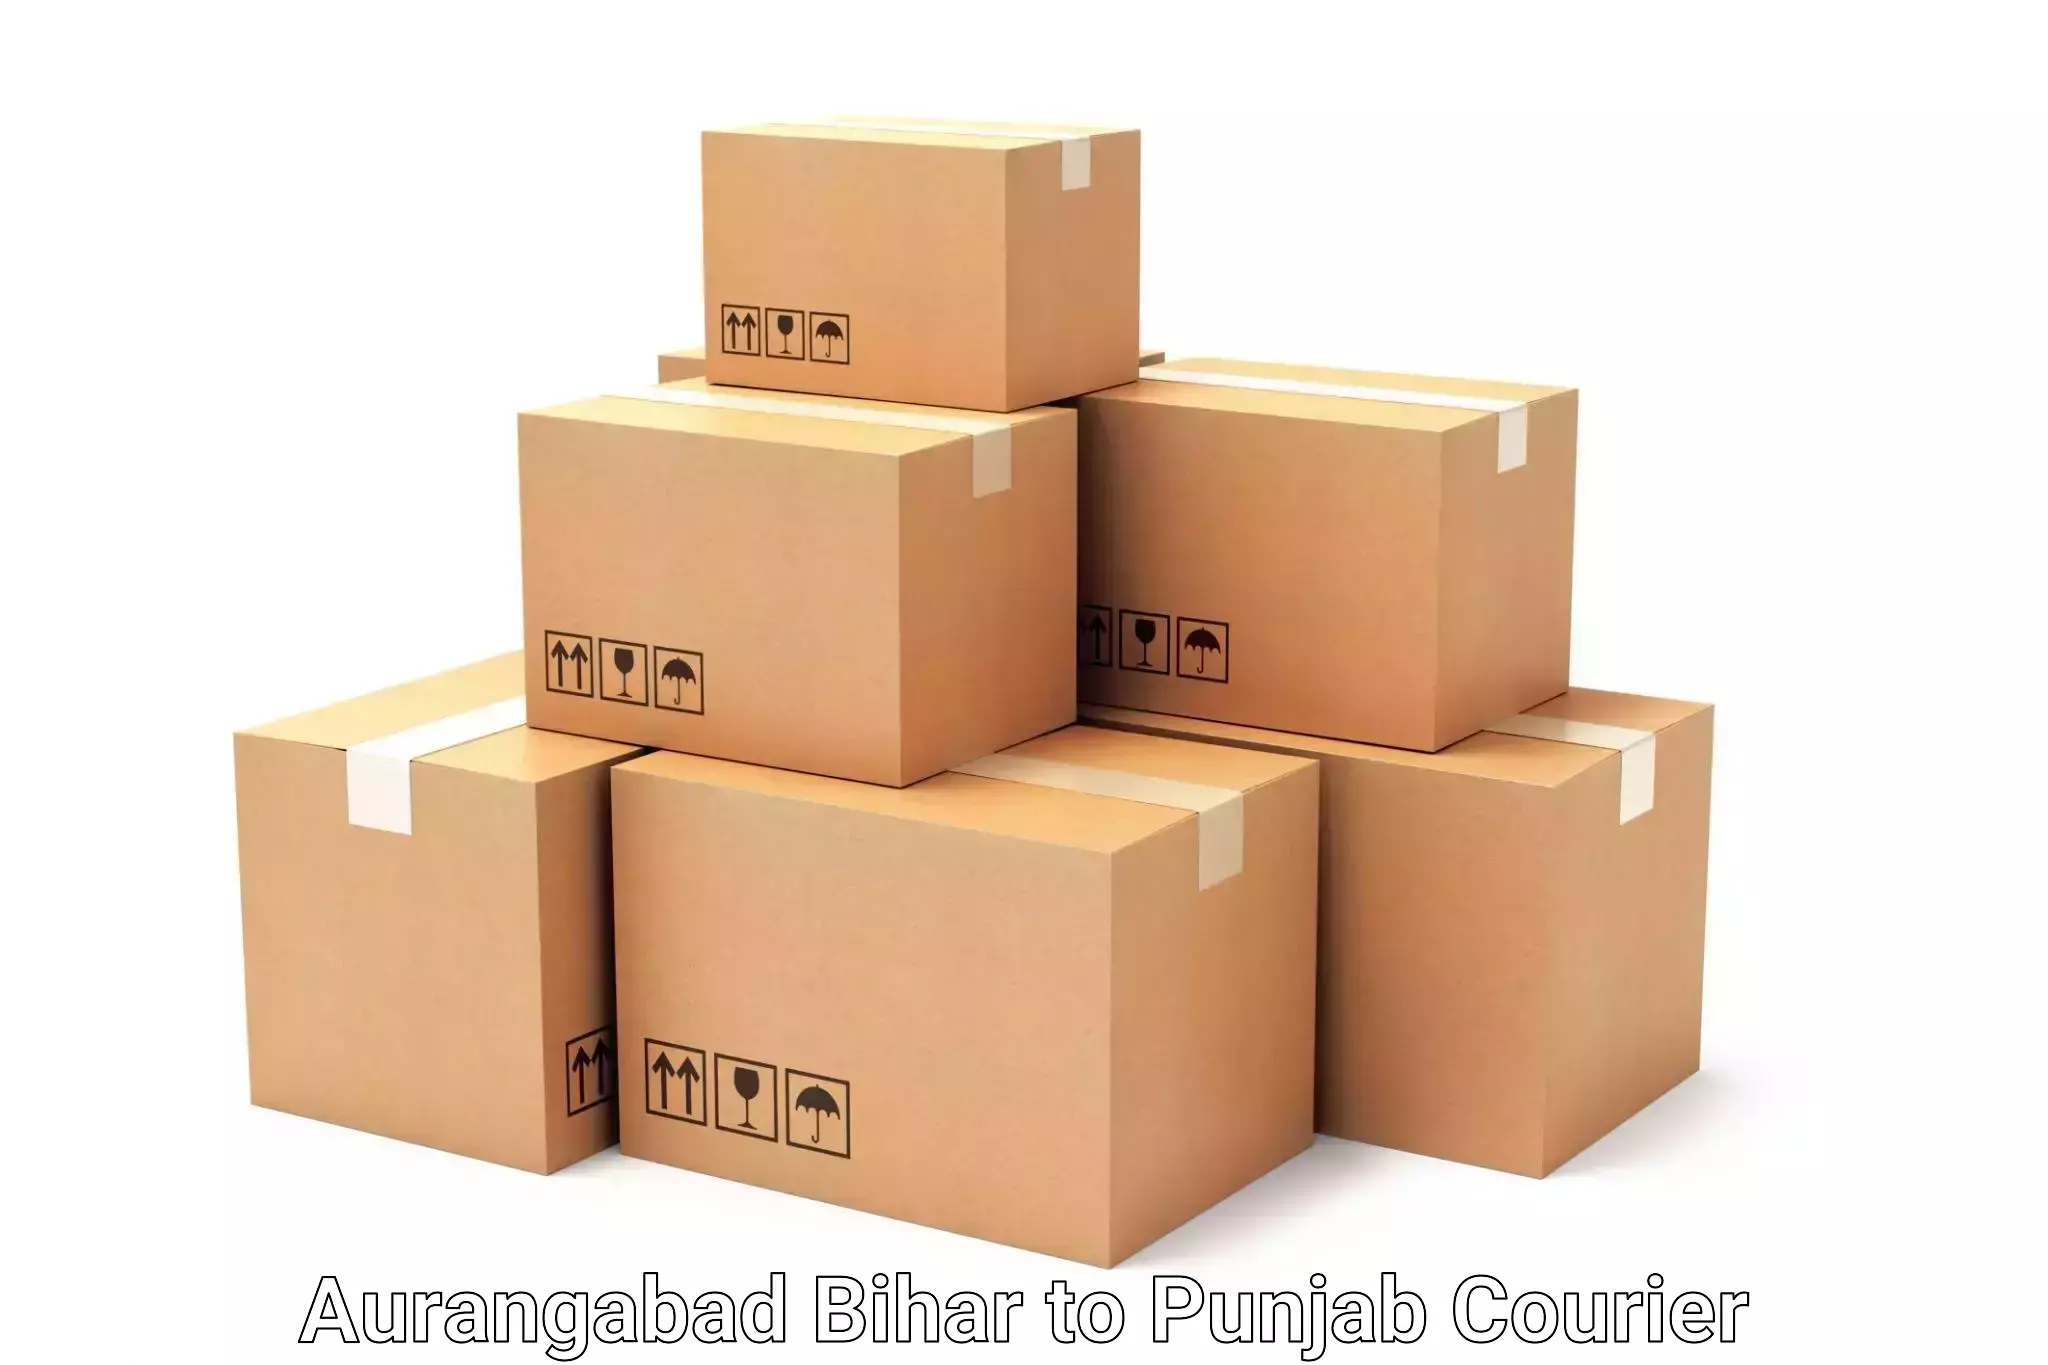 Baggage relocation service Aurangabad Bihar to Central University of Punjab Bathinda